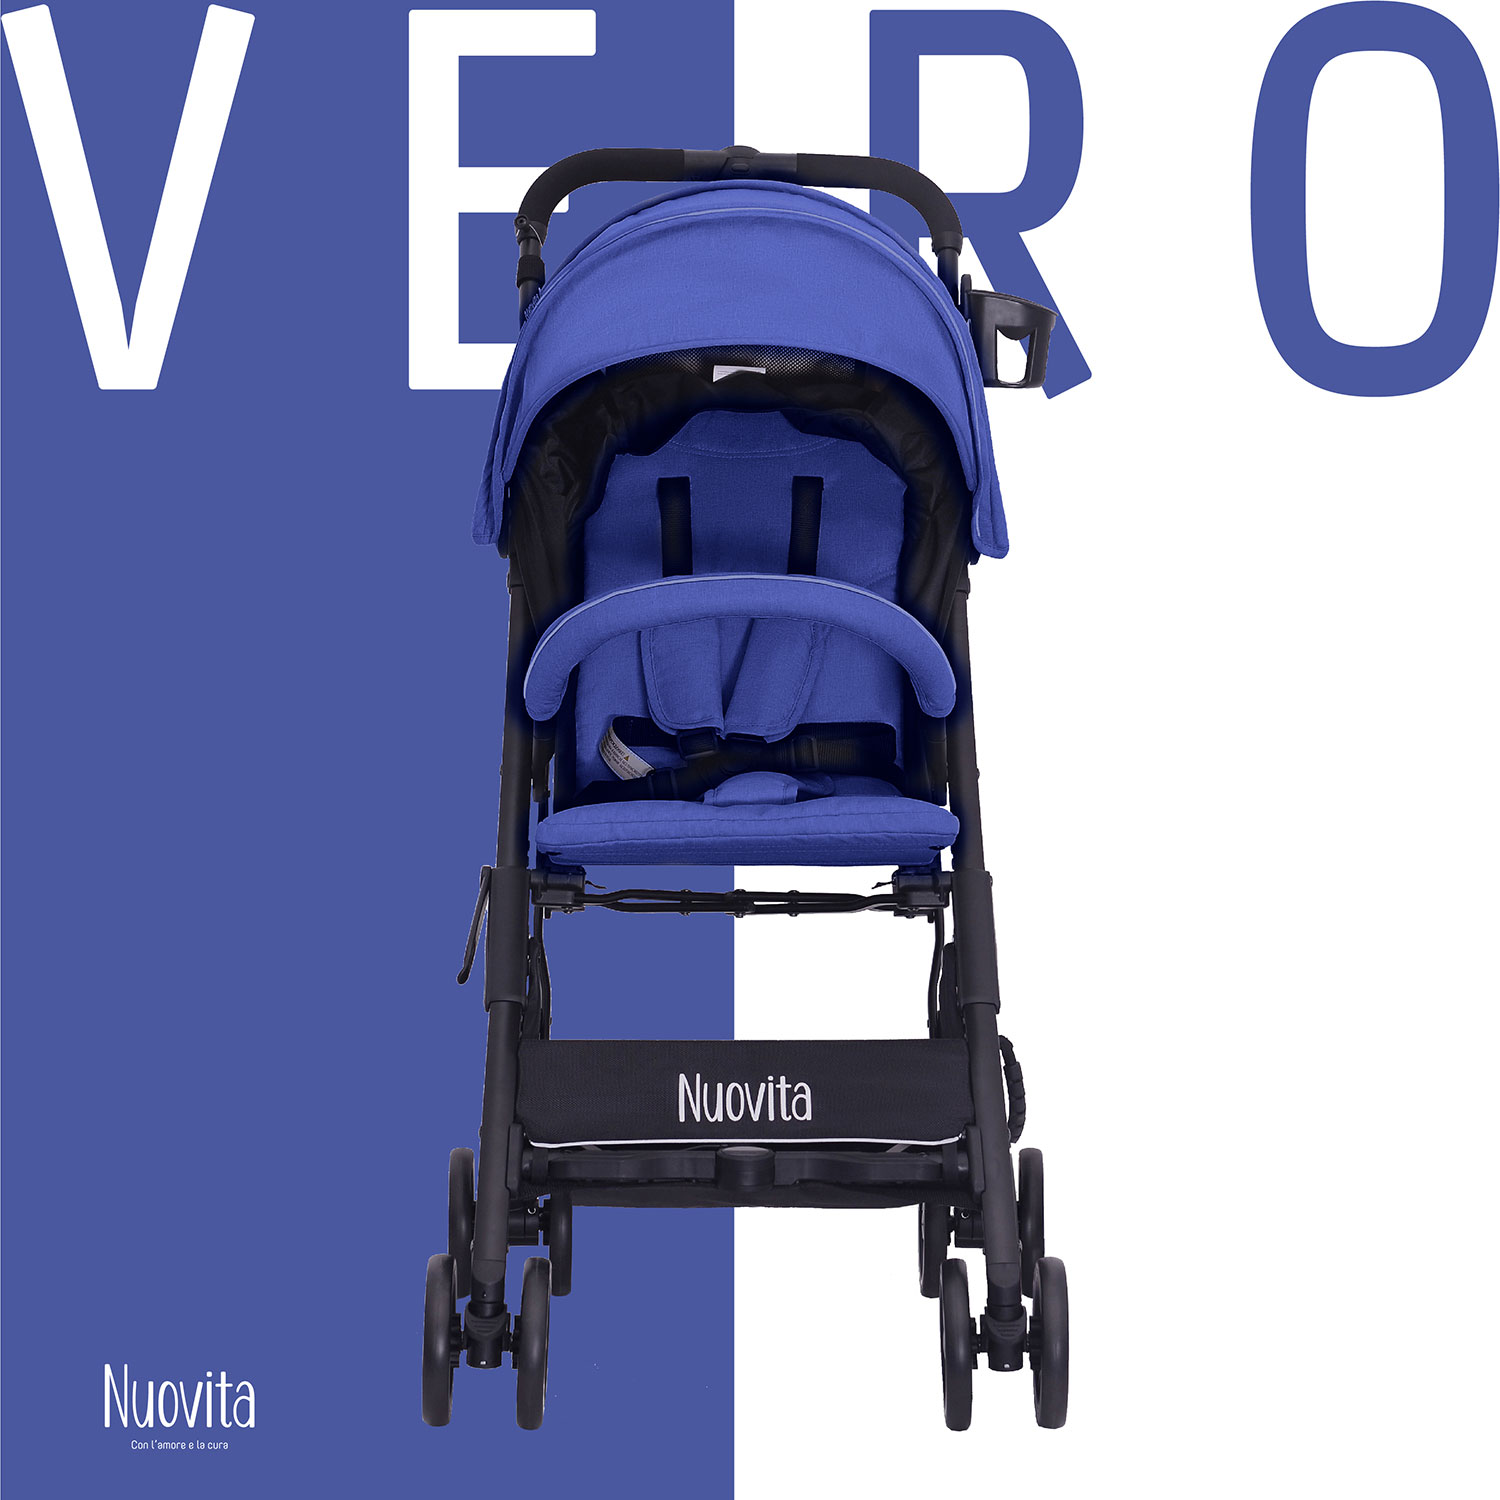 Прогулочная коляска Nuovita Vero Blu Голубой